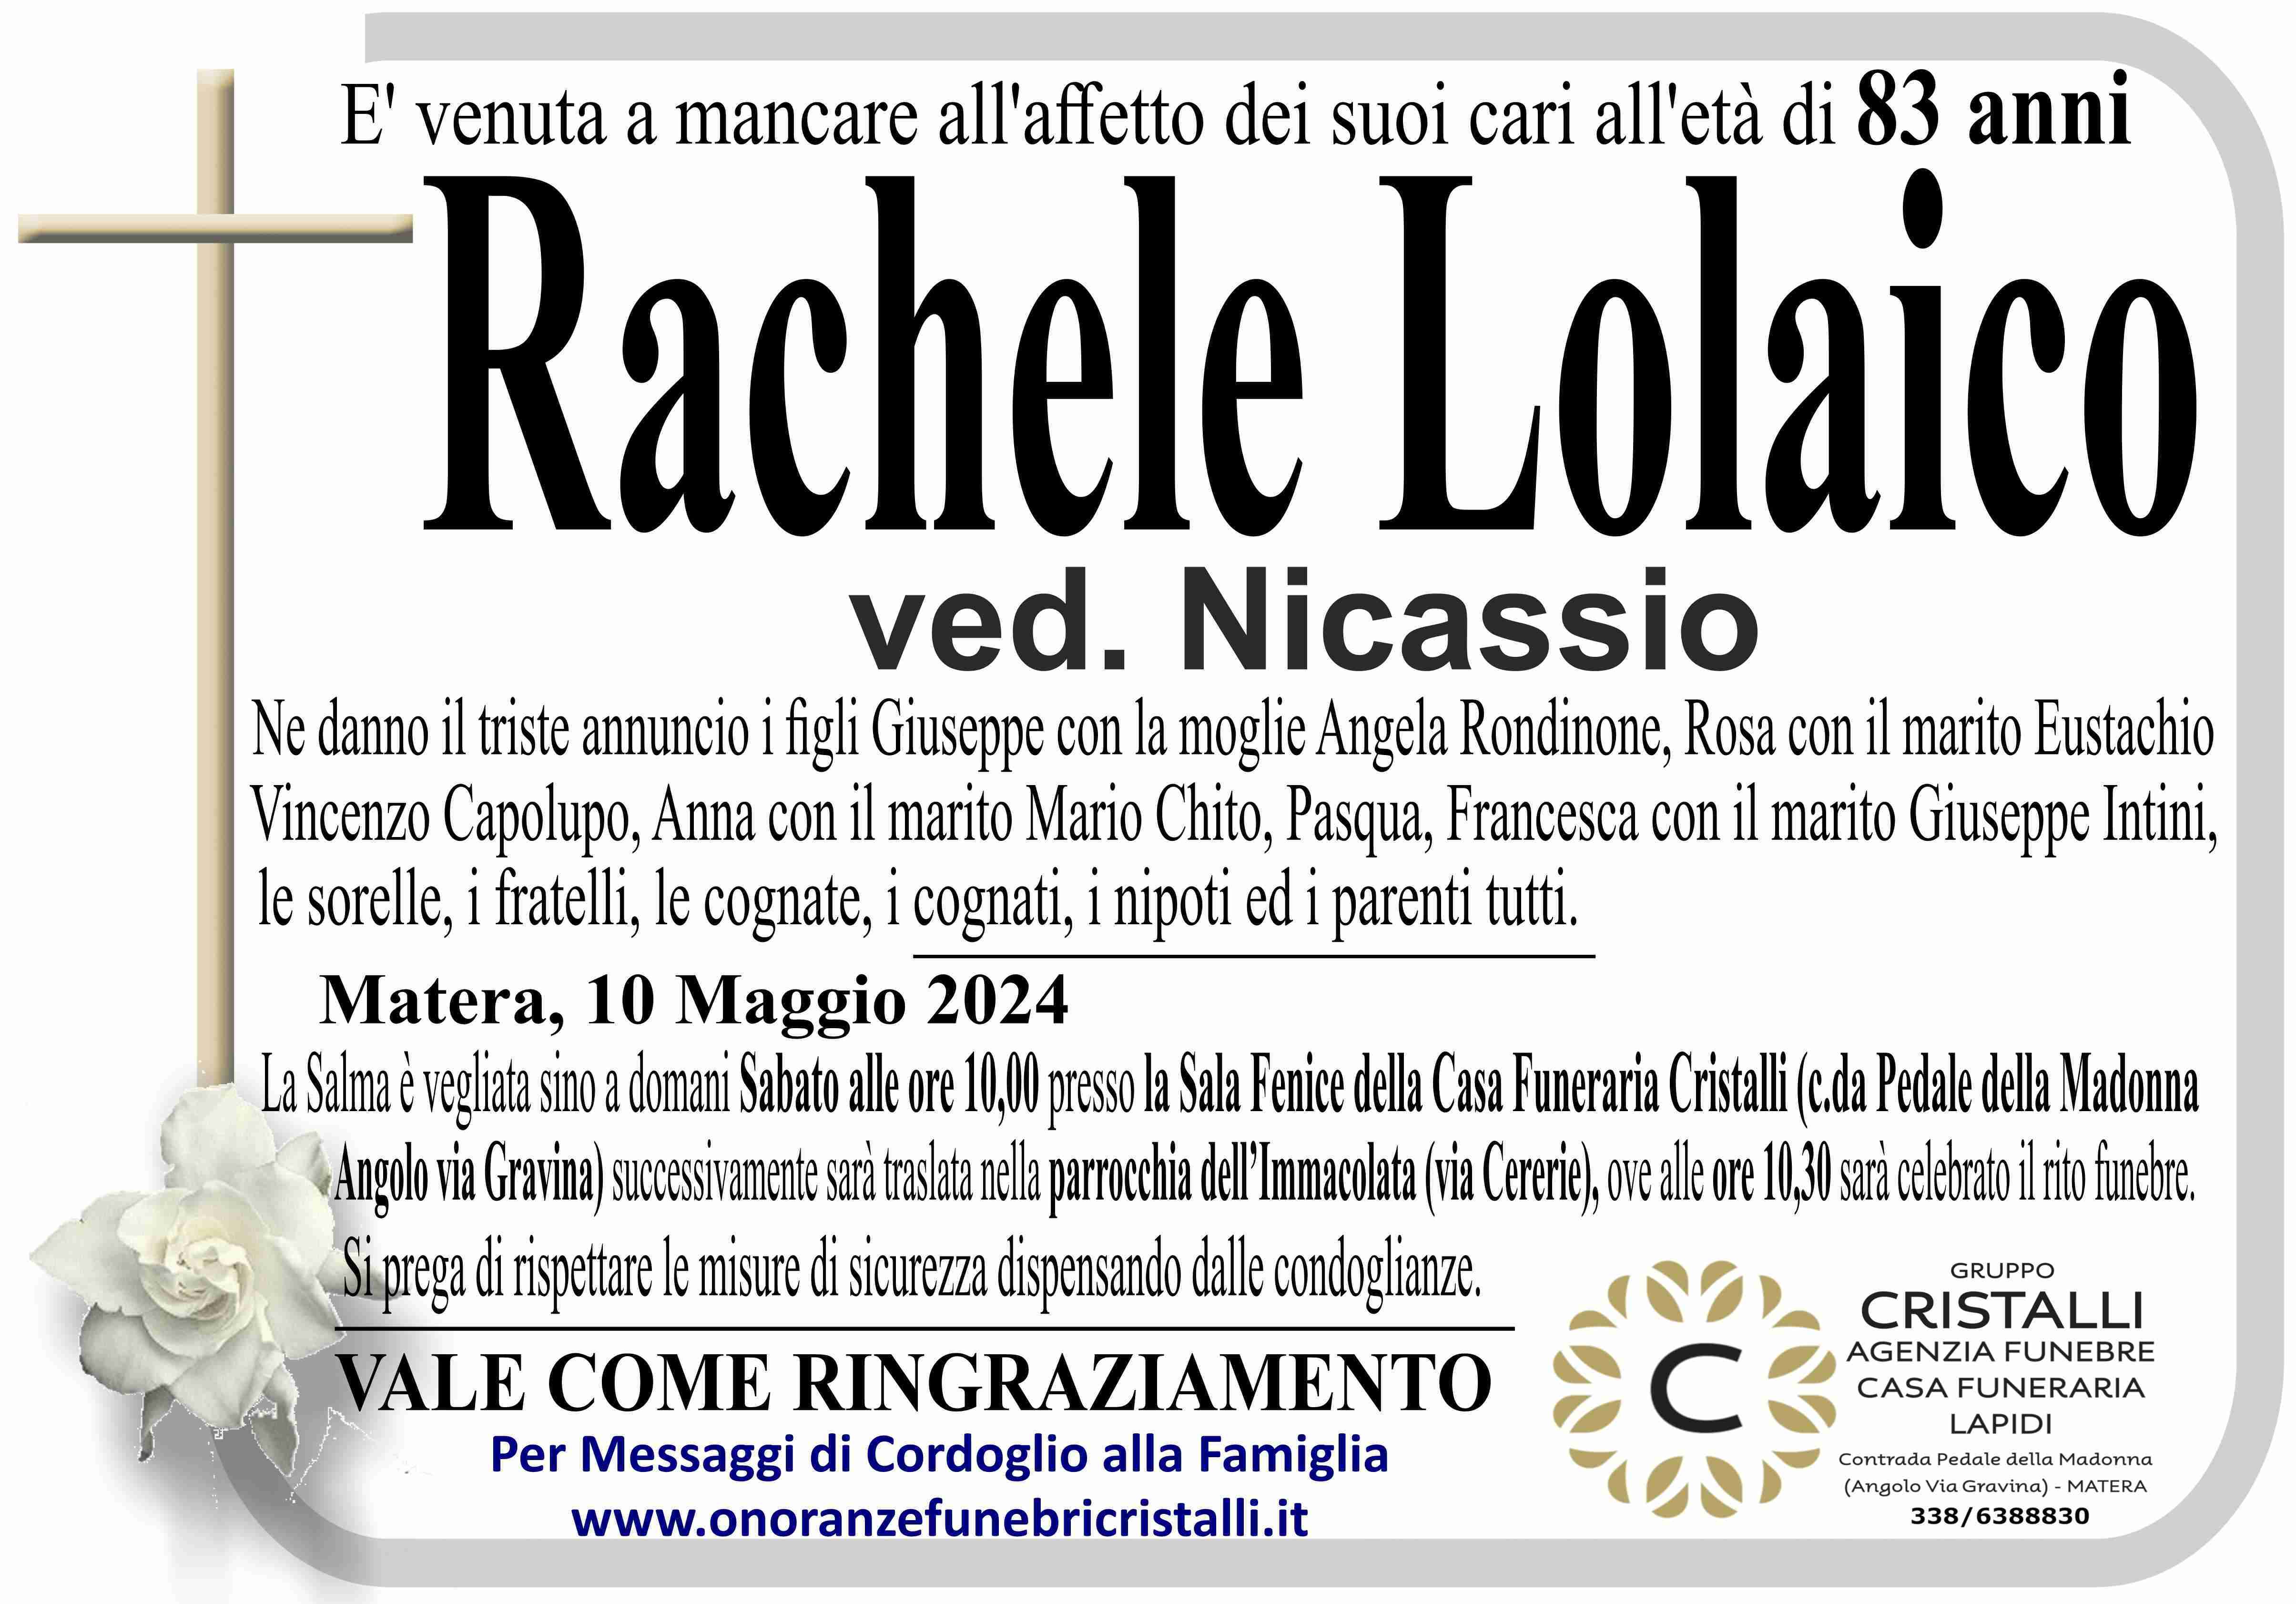 Rachele Lolaico